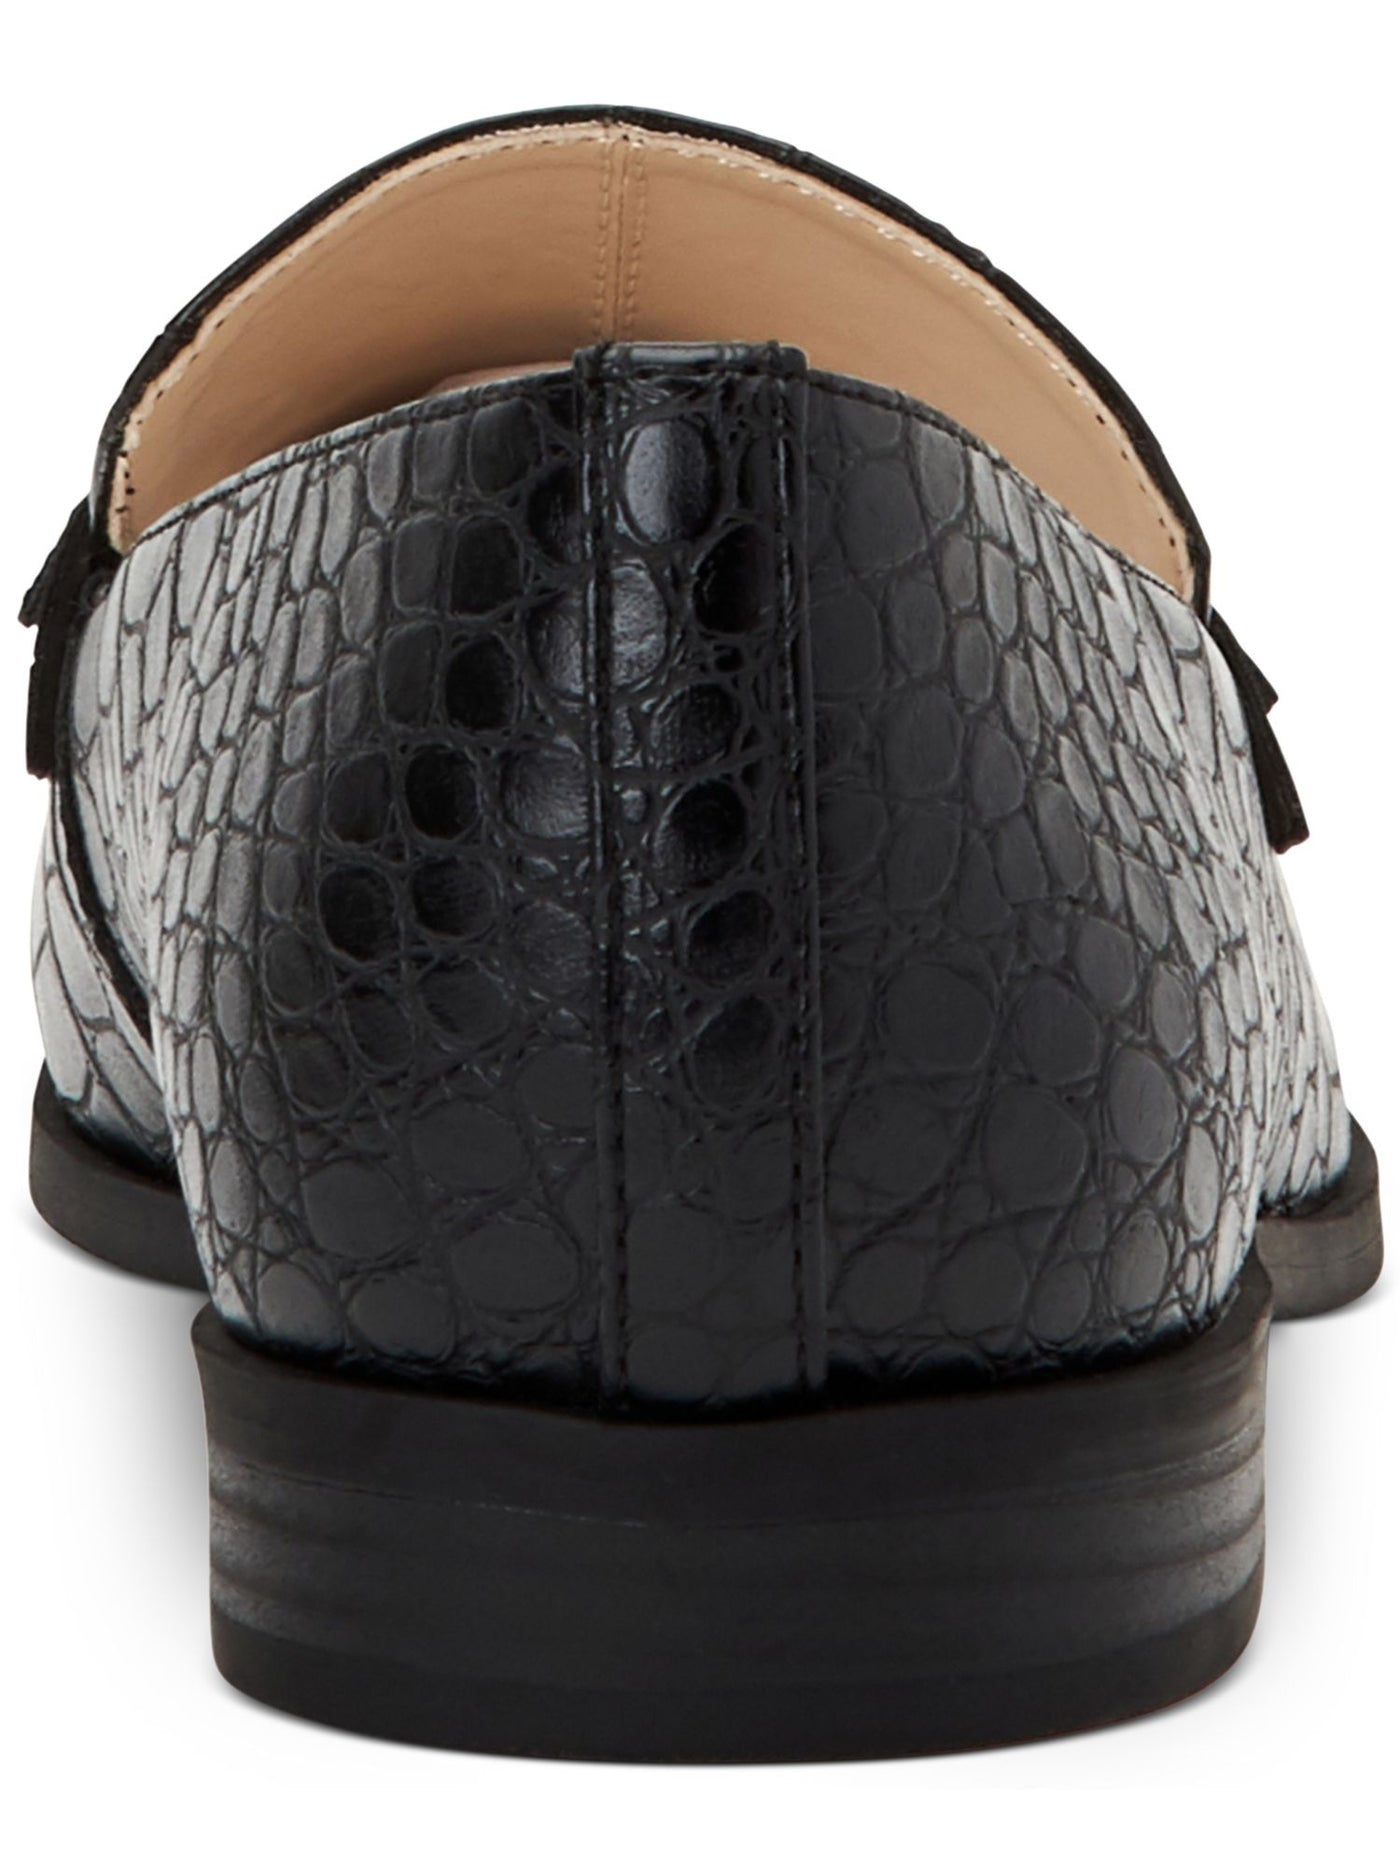 CHARTER CLUB Womens Black Crocodile Chain Comfort Kattelle Round Toe Block Heel Slip On Loafers Shoes 7.5 M